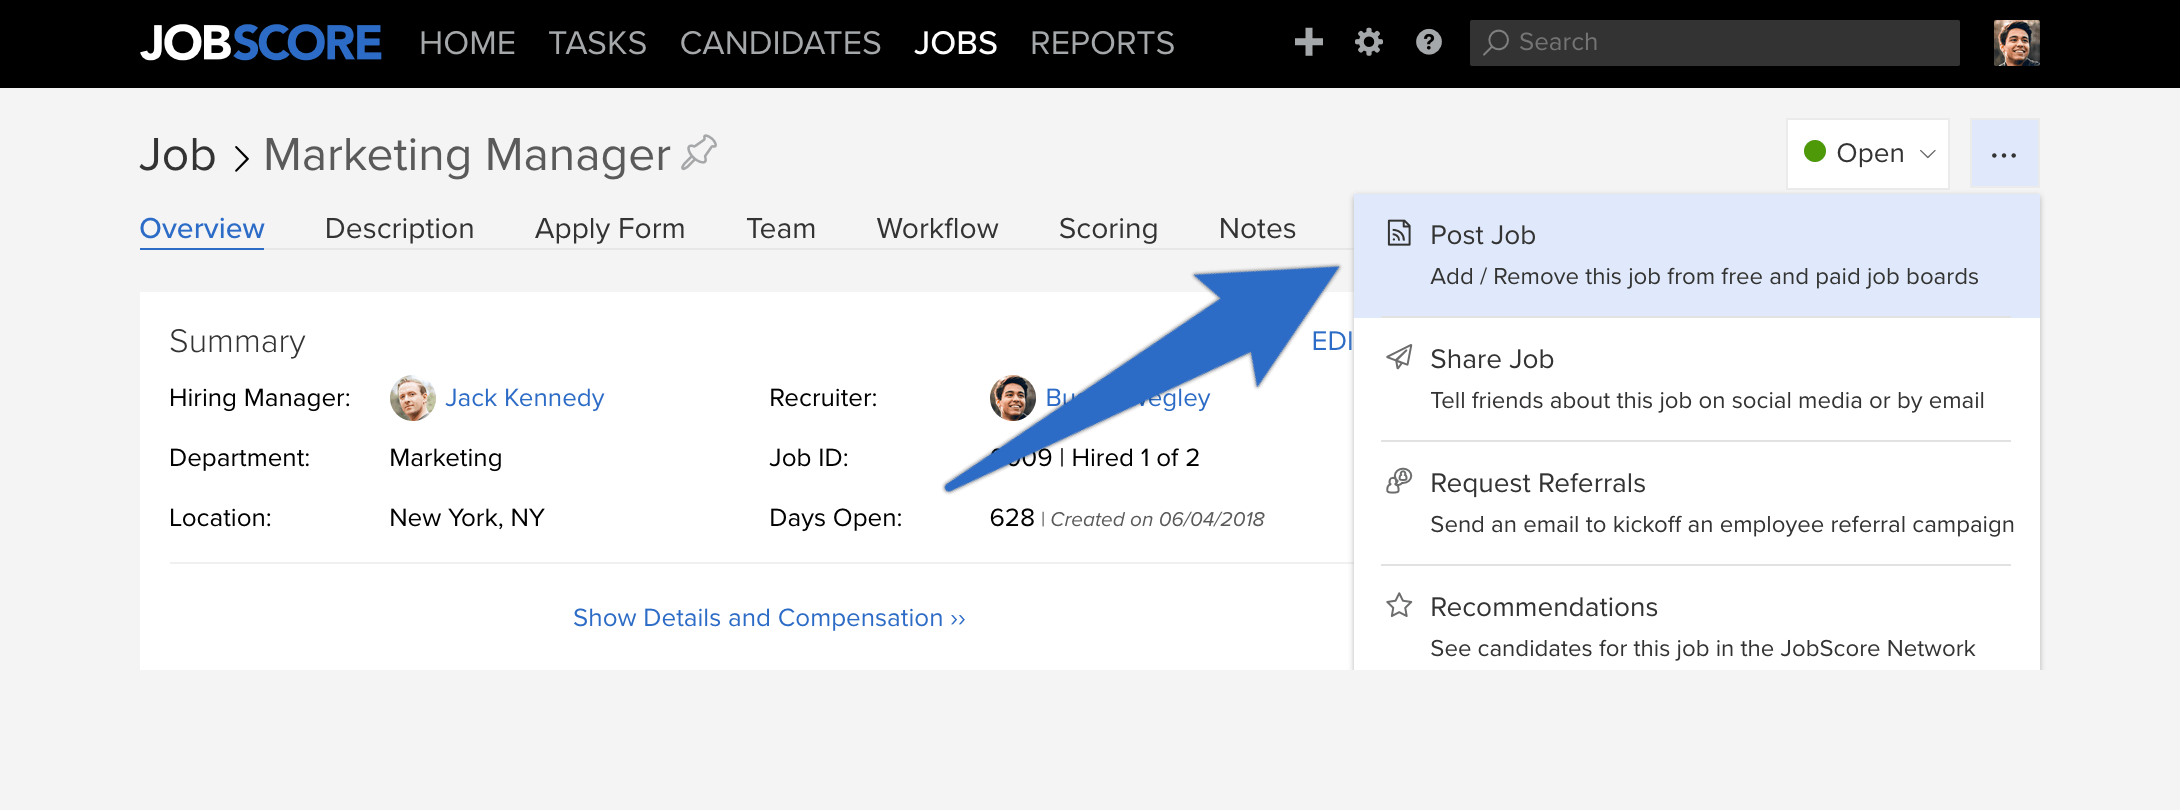 post_job_button